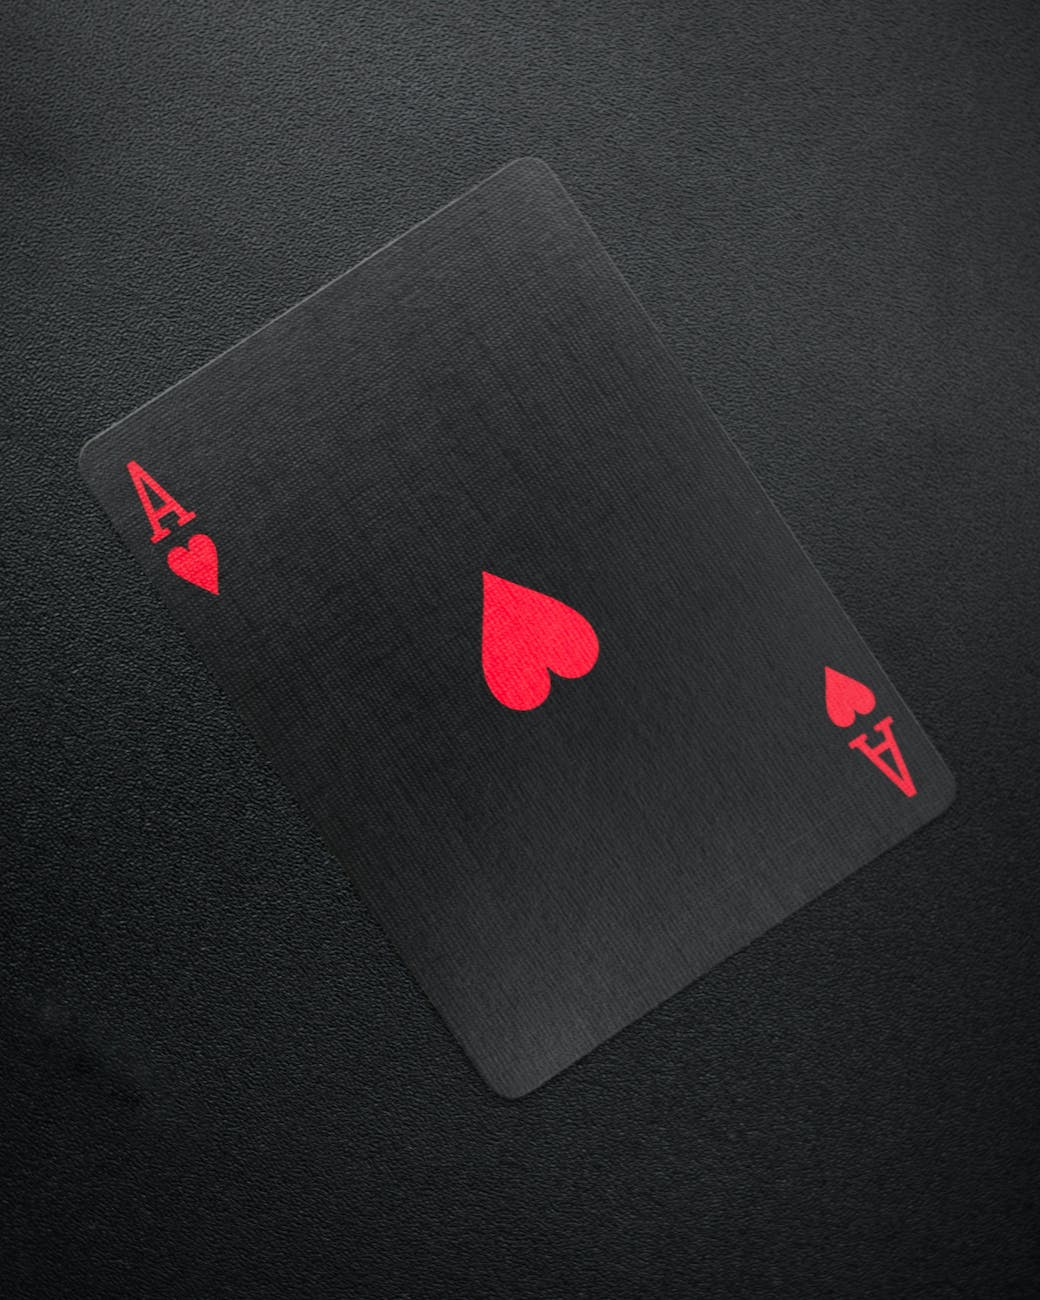 basic 5 card draw poker rules